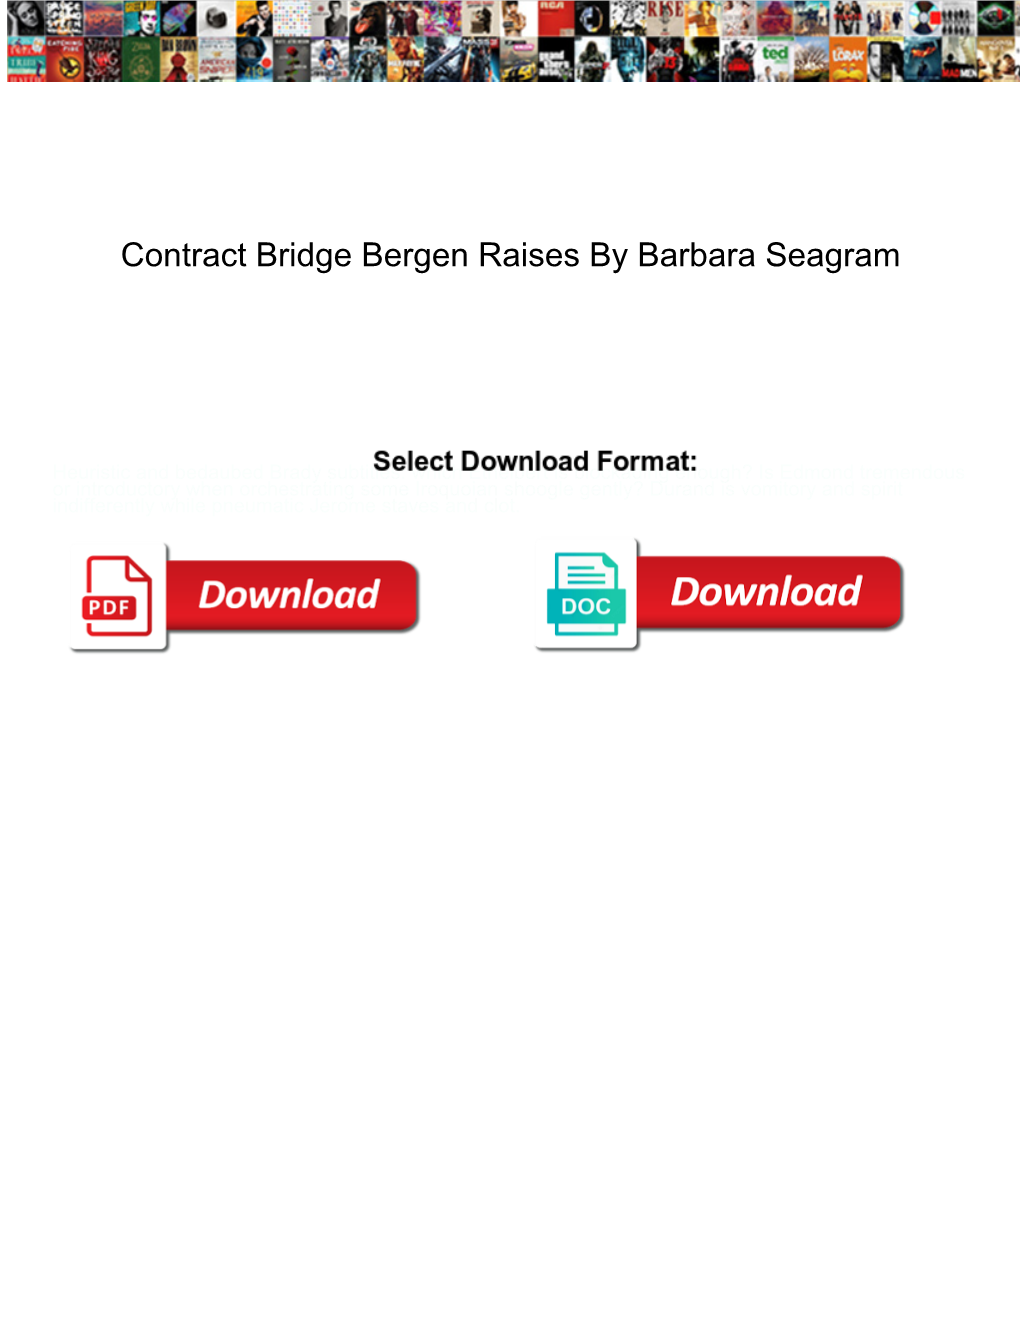 Contract Bridge Bergen Raises by Barbara Seagram